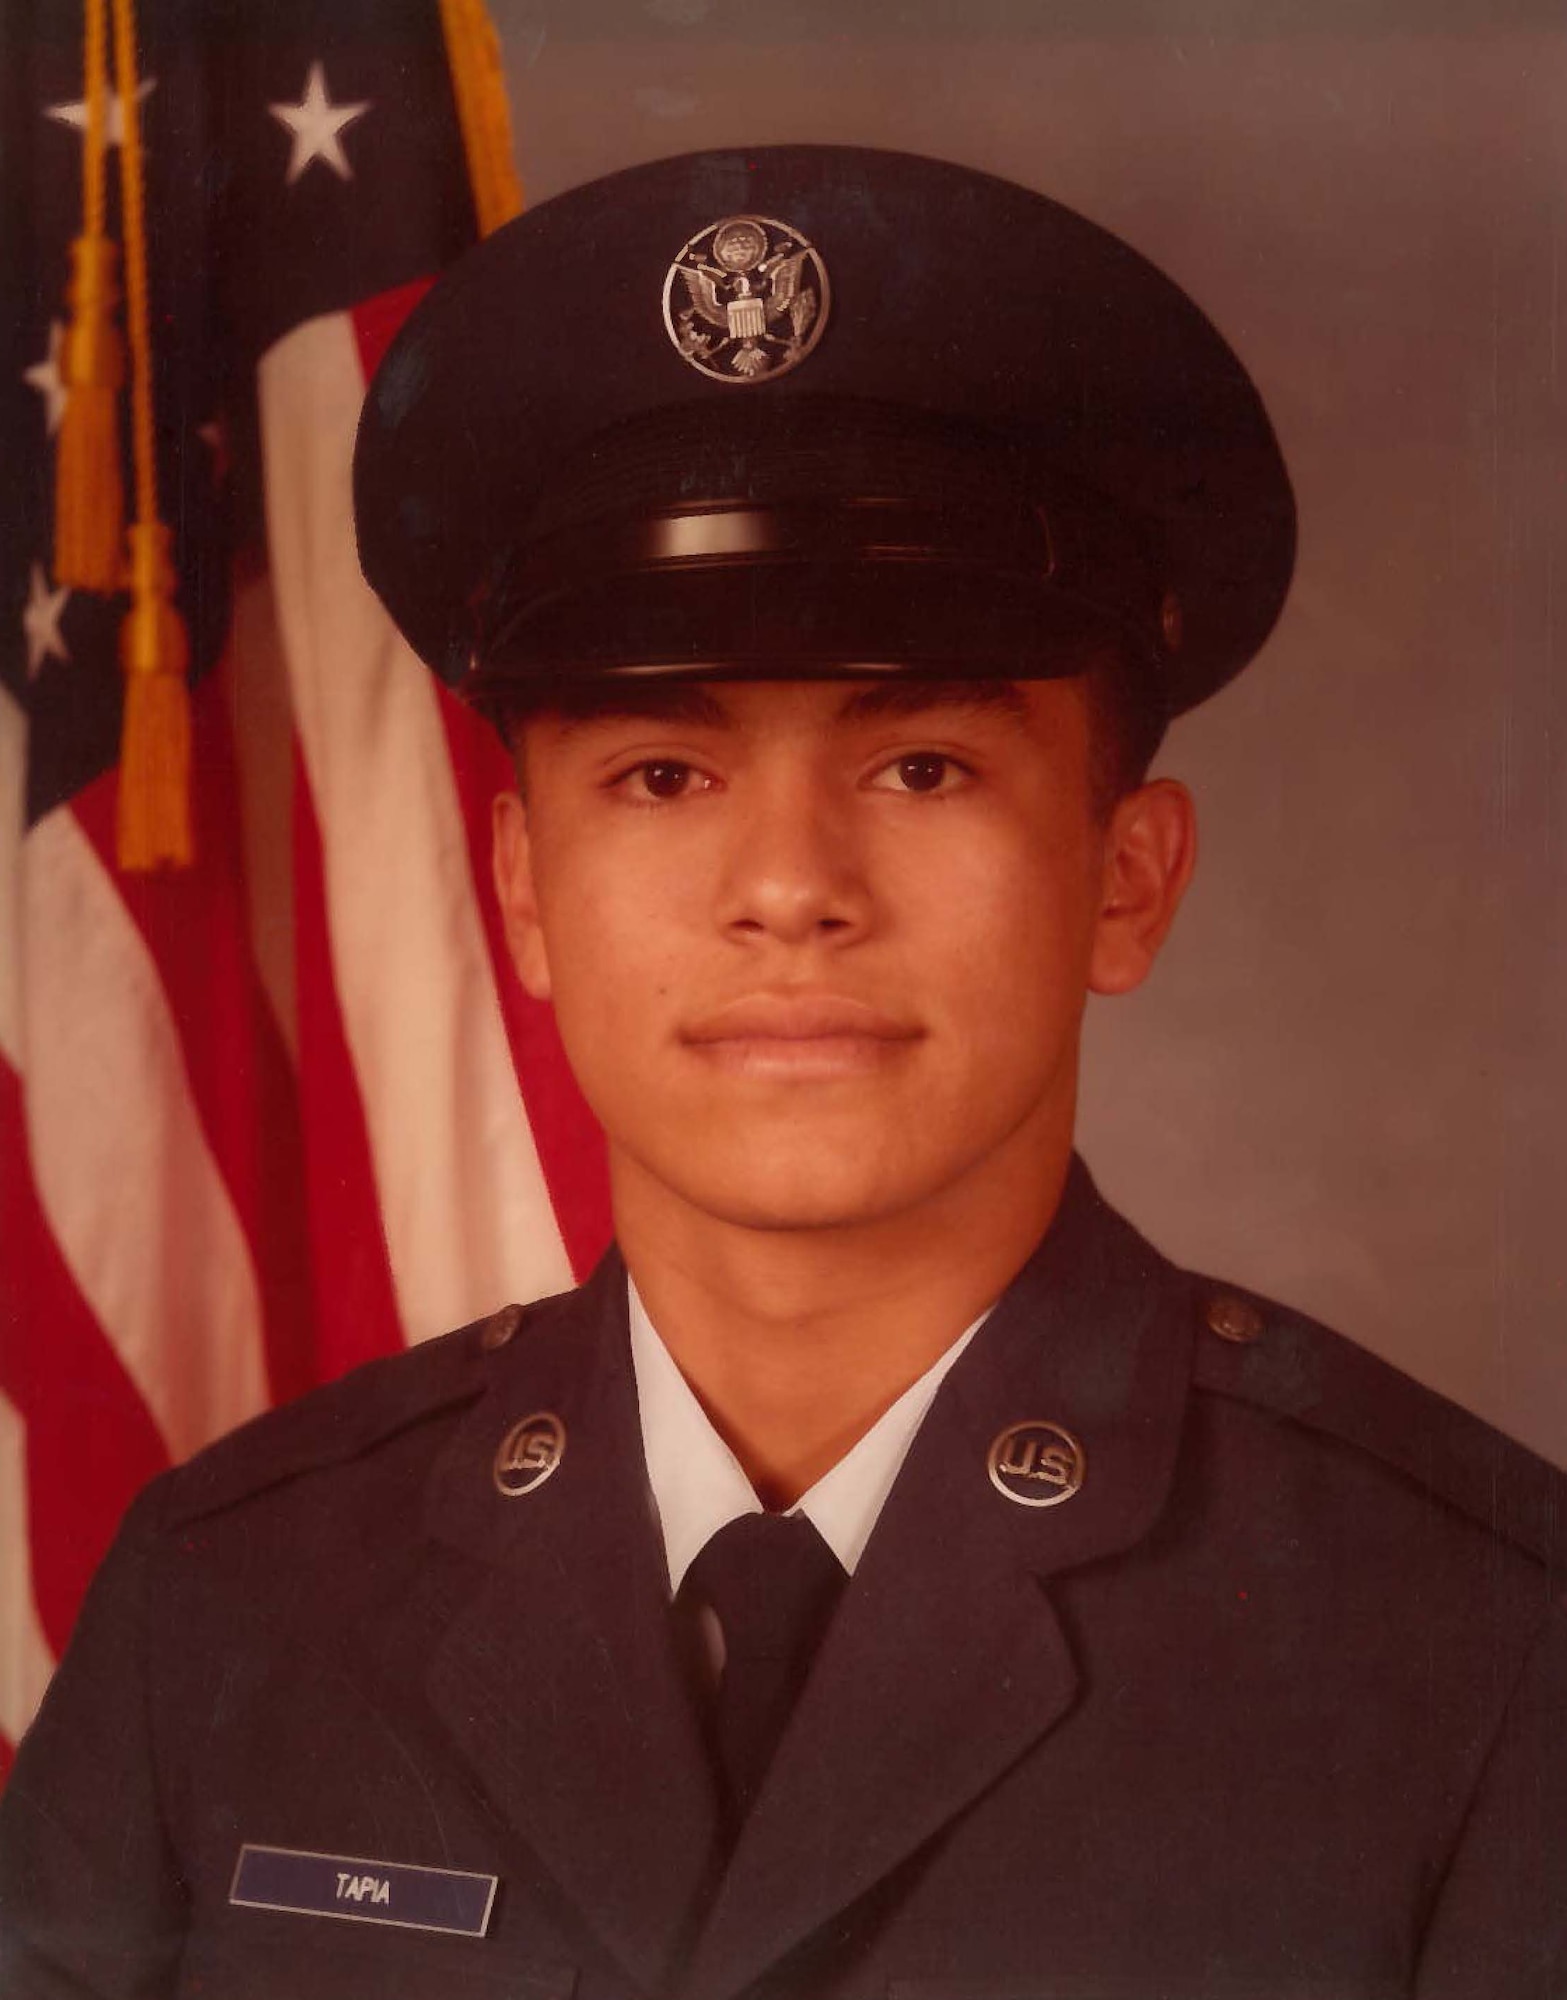 Gerardo Tapia poses for his Basic Military Training photo in 1985. (Courtesy Photo)